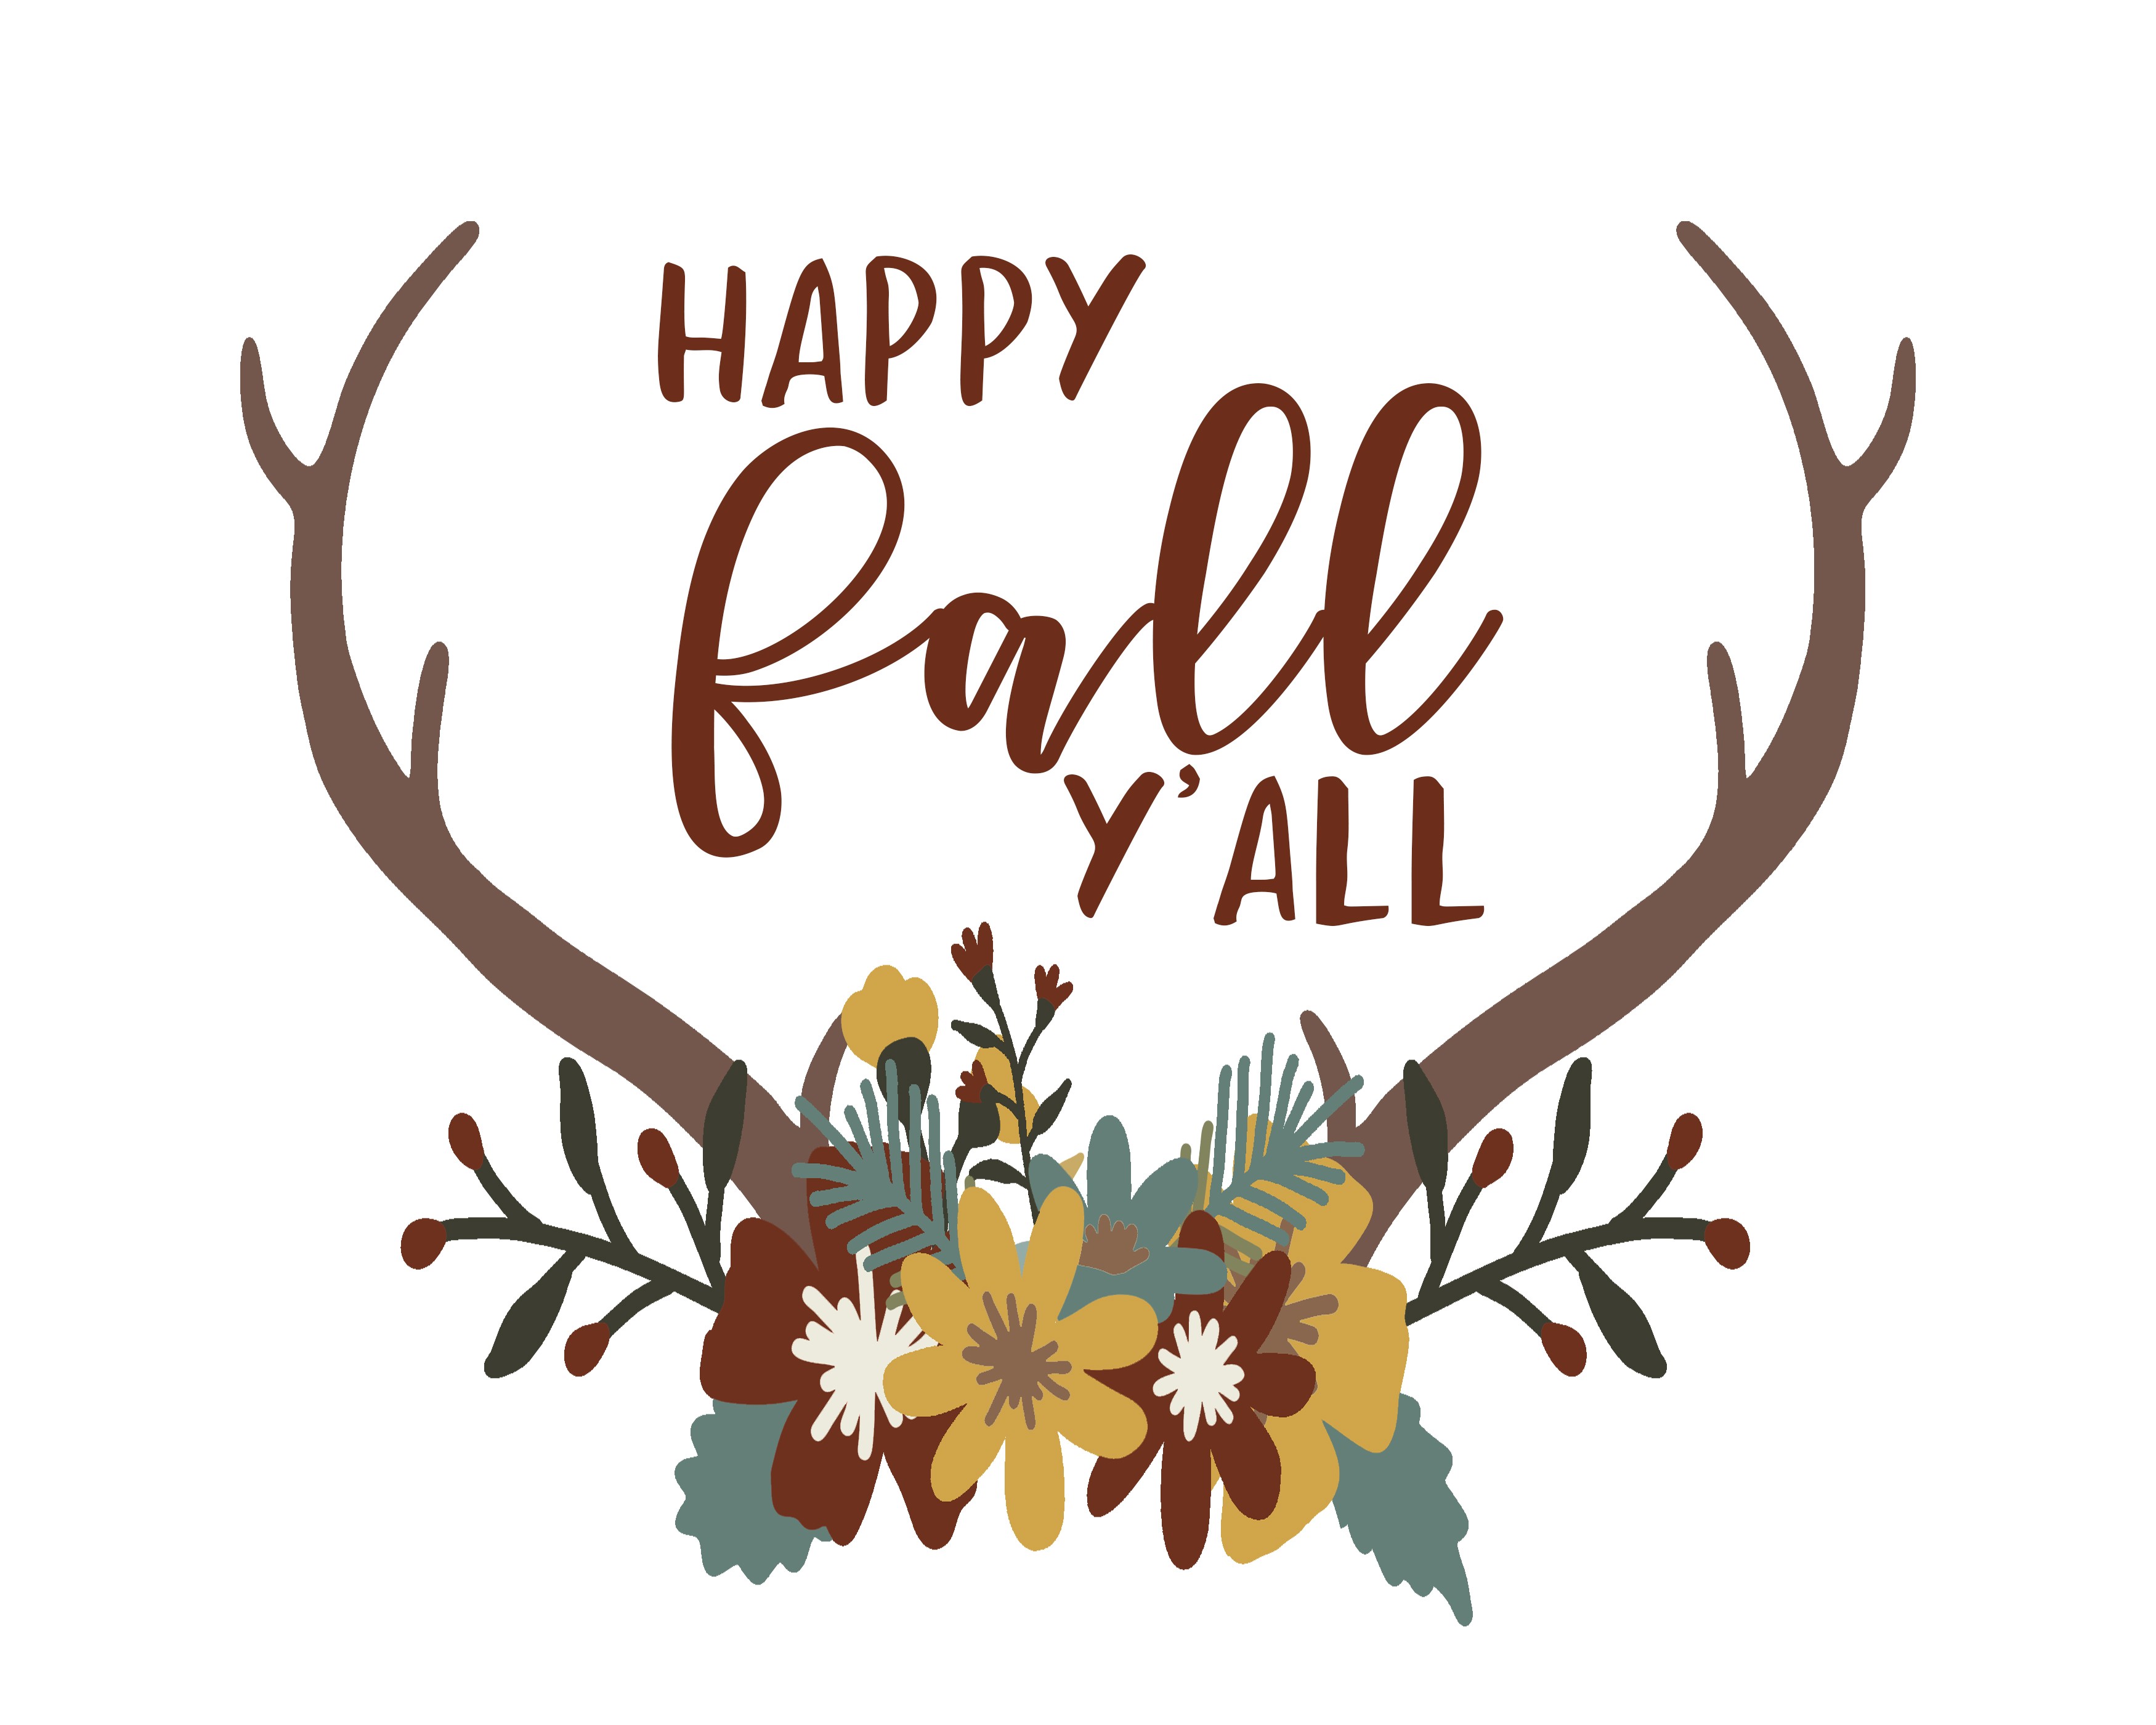 Happy Fall Yall.